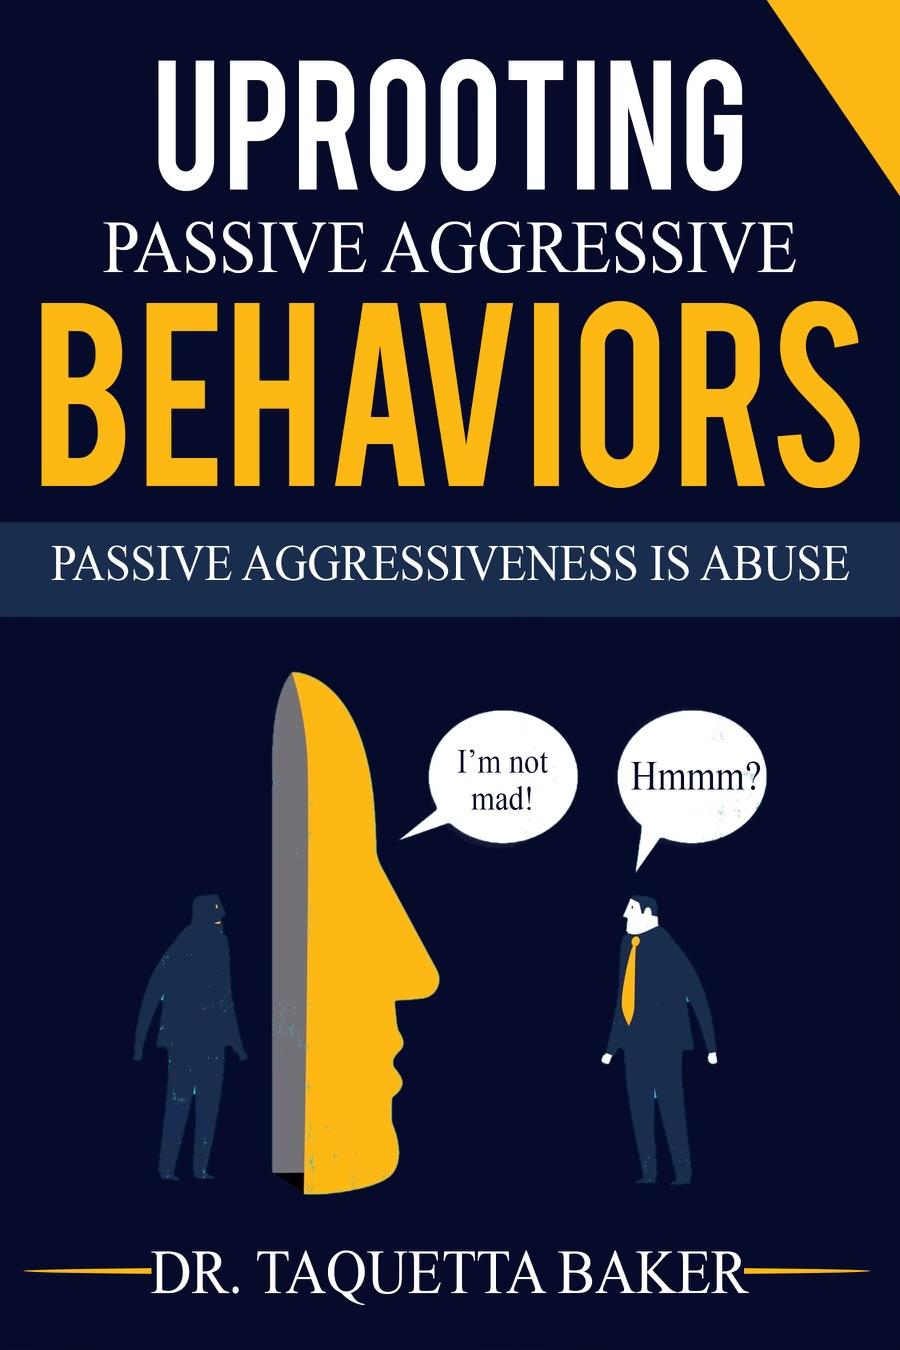 Uprooting Passive Aggressive Behaviors